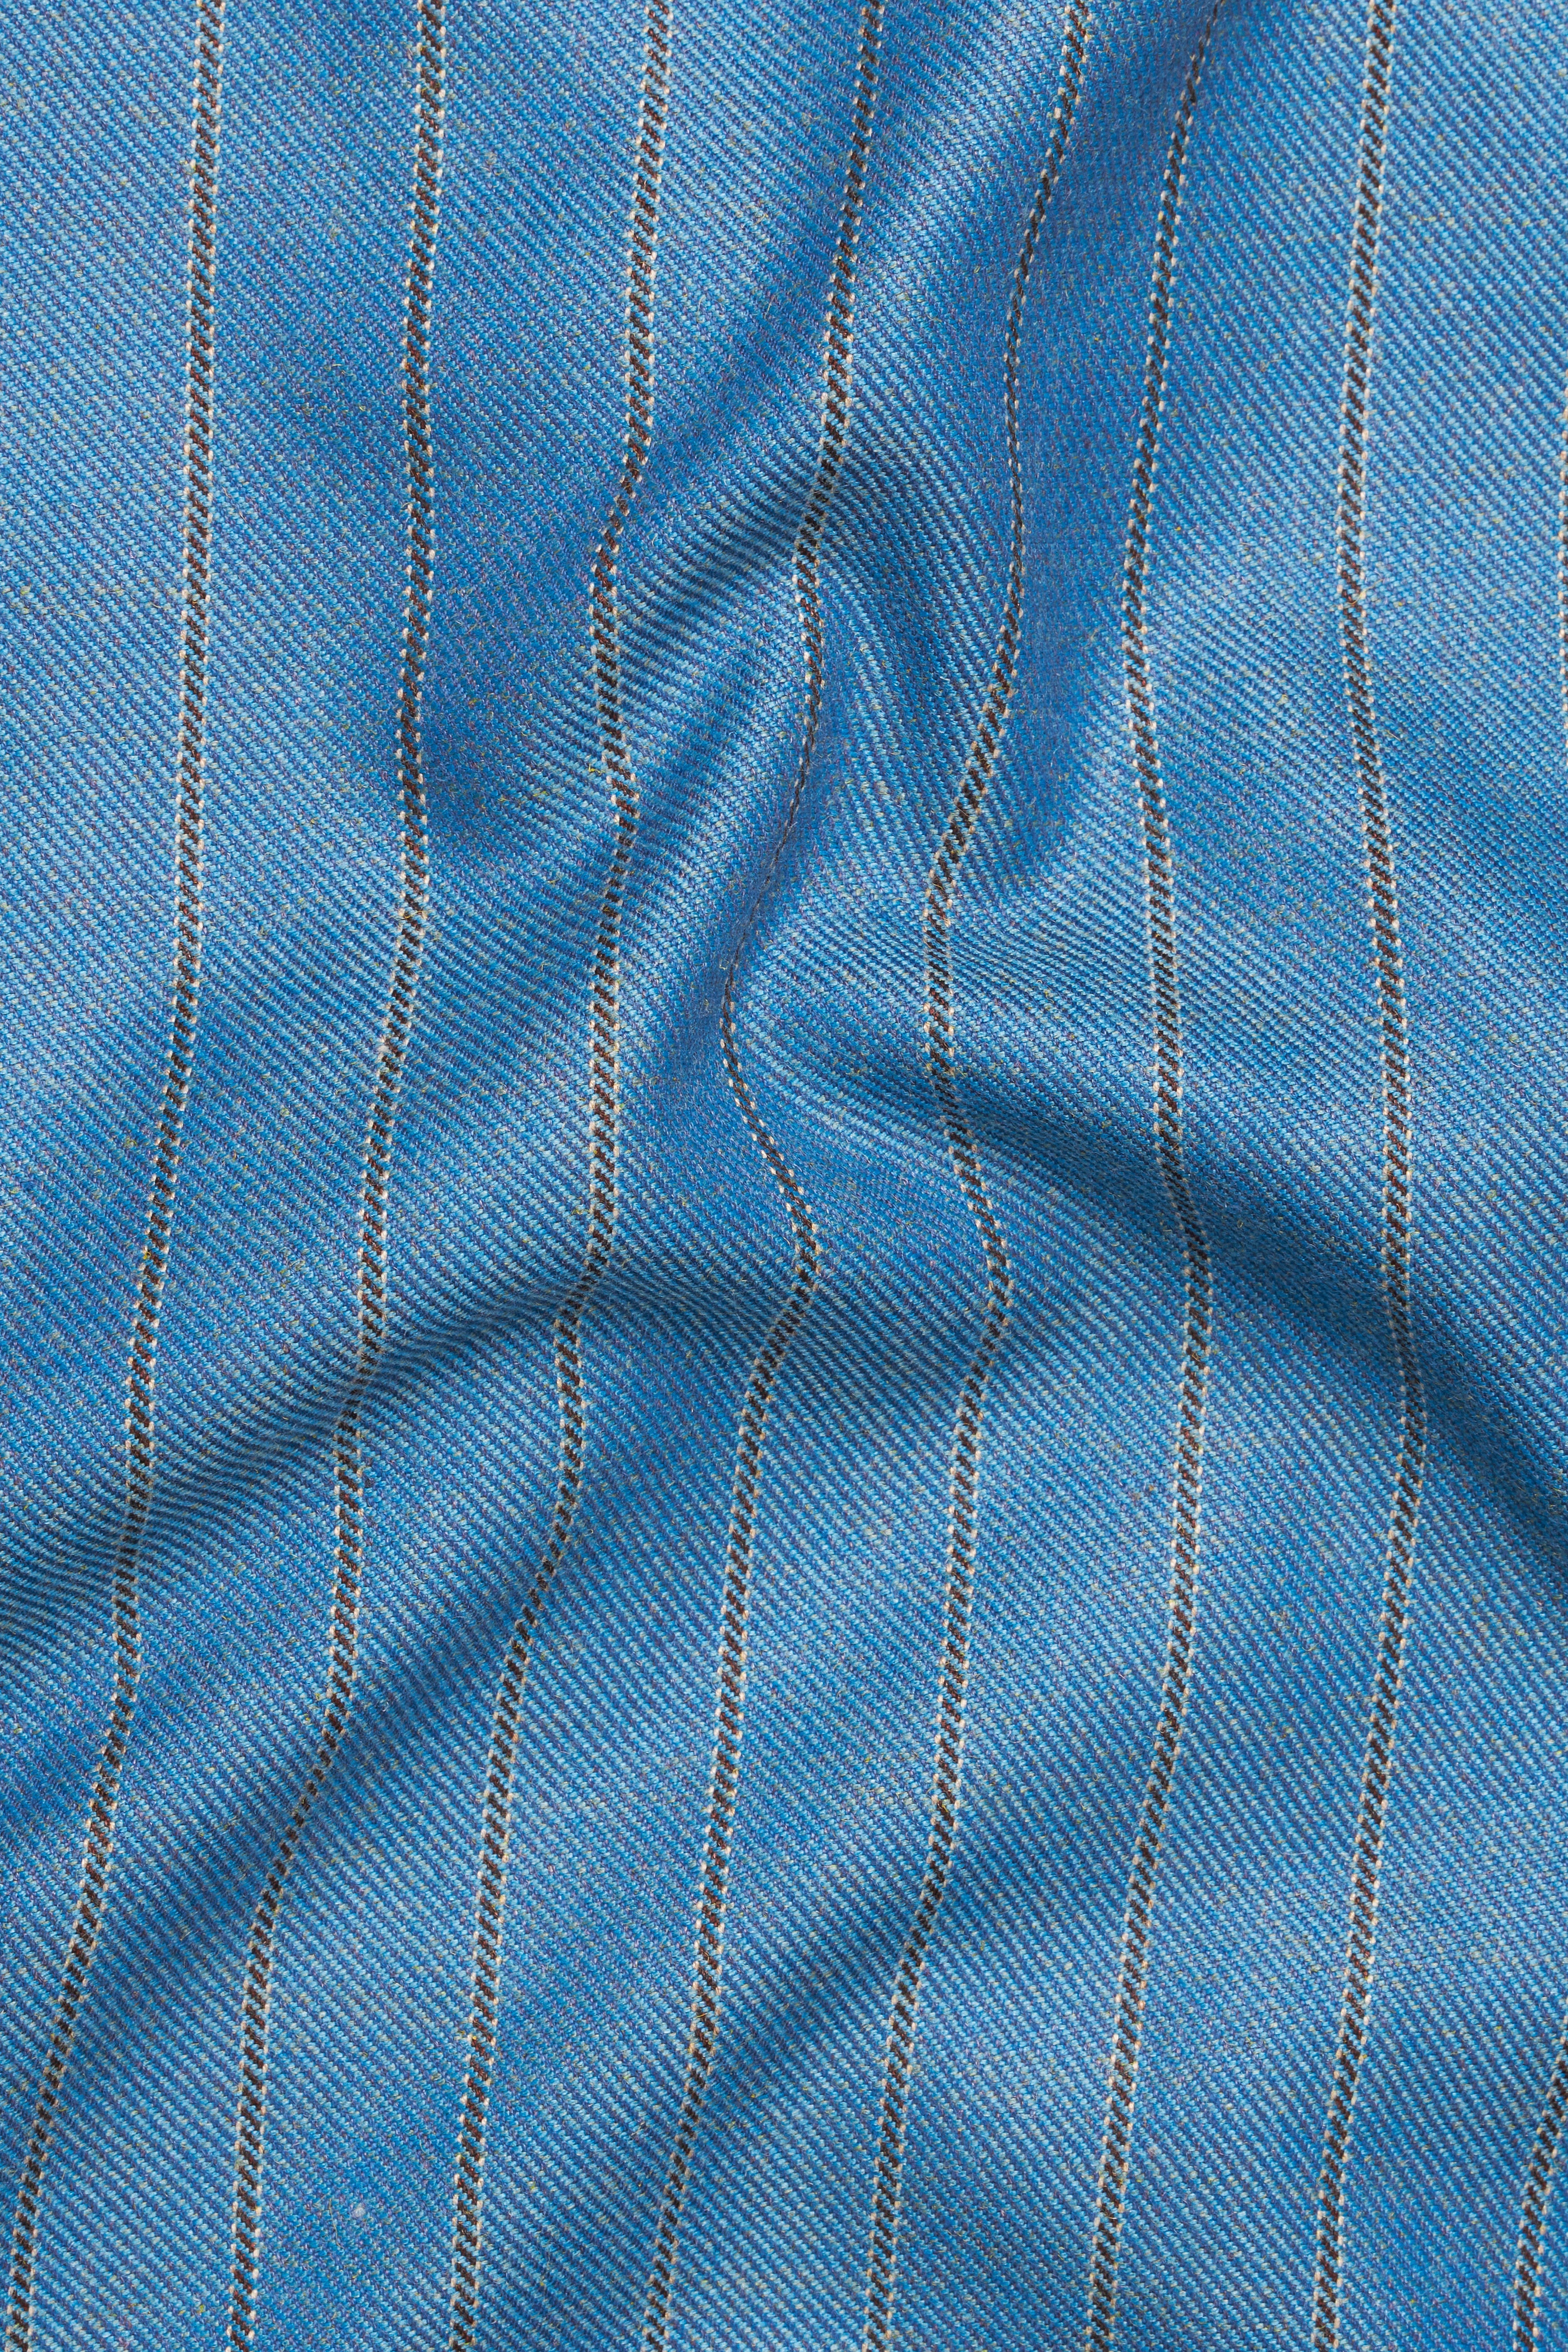 Wedgewood Blue Subtle Striped Tweed Pant T2766-28, T2766-30, T2766-32, T2766-34, T2766-36, T2766-38, T2766-40, T2766-42, T2766-44